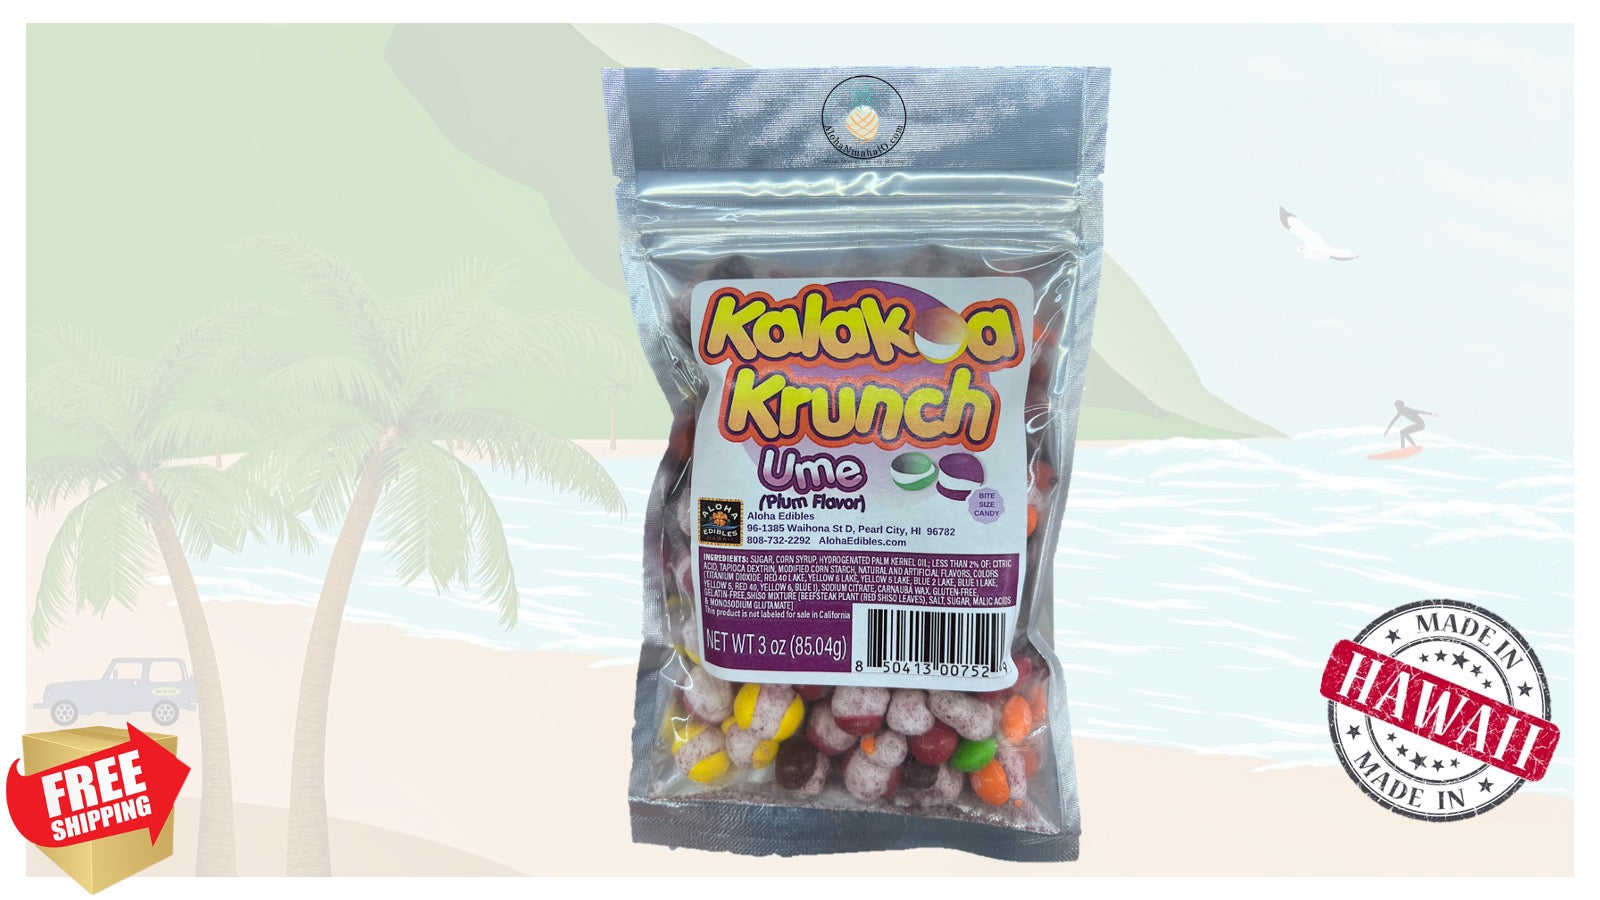 Kalakoa Krunch Tropical Candy Mix - Gluten-Free, Gelatin-Free Bite-Size Sweets from Hawaii - 3 oz Bag (Ume (Plum Flavor), 3 oz)